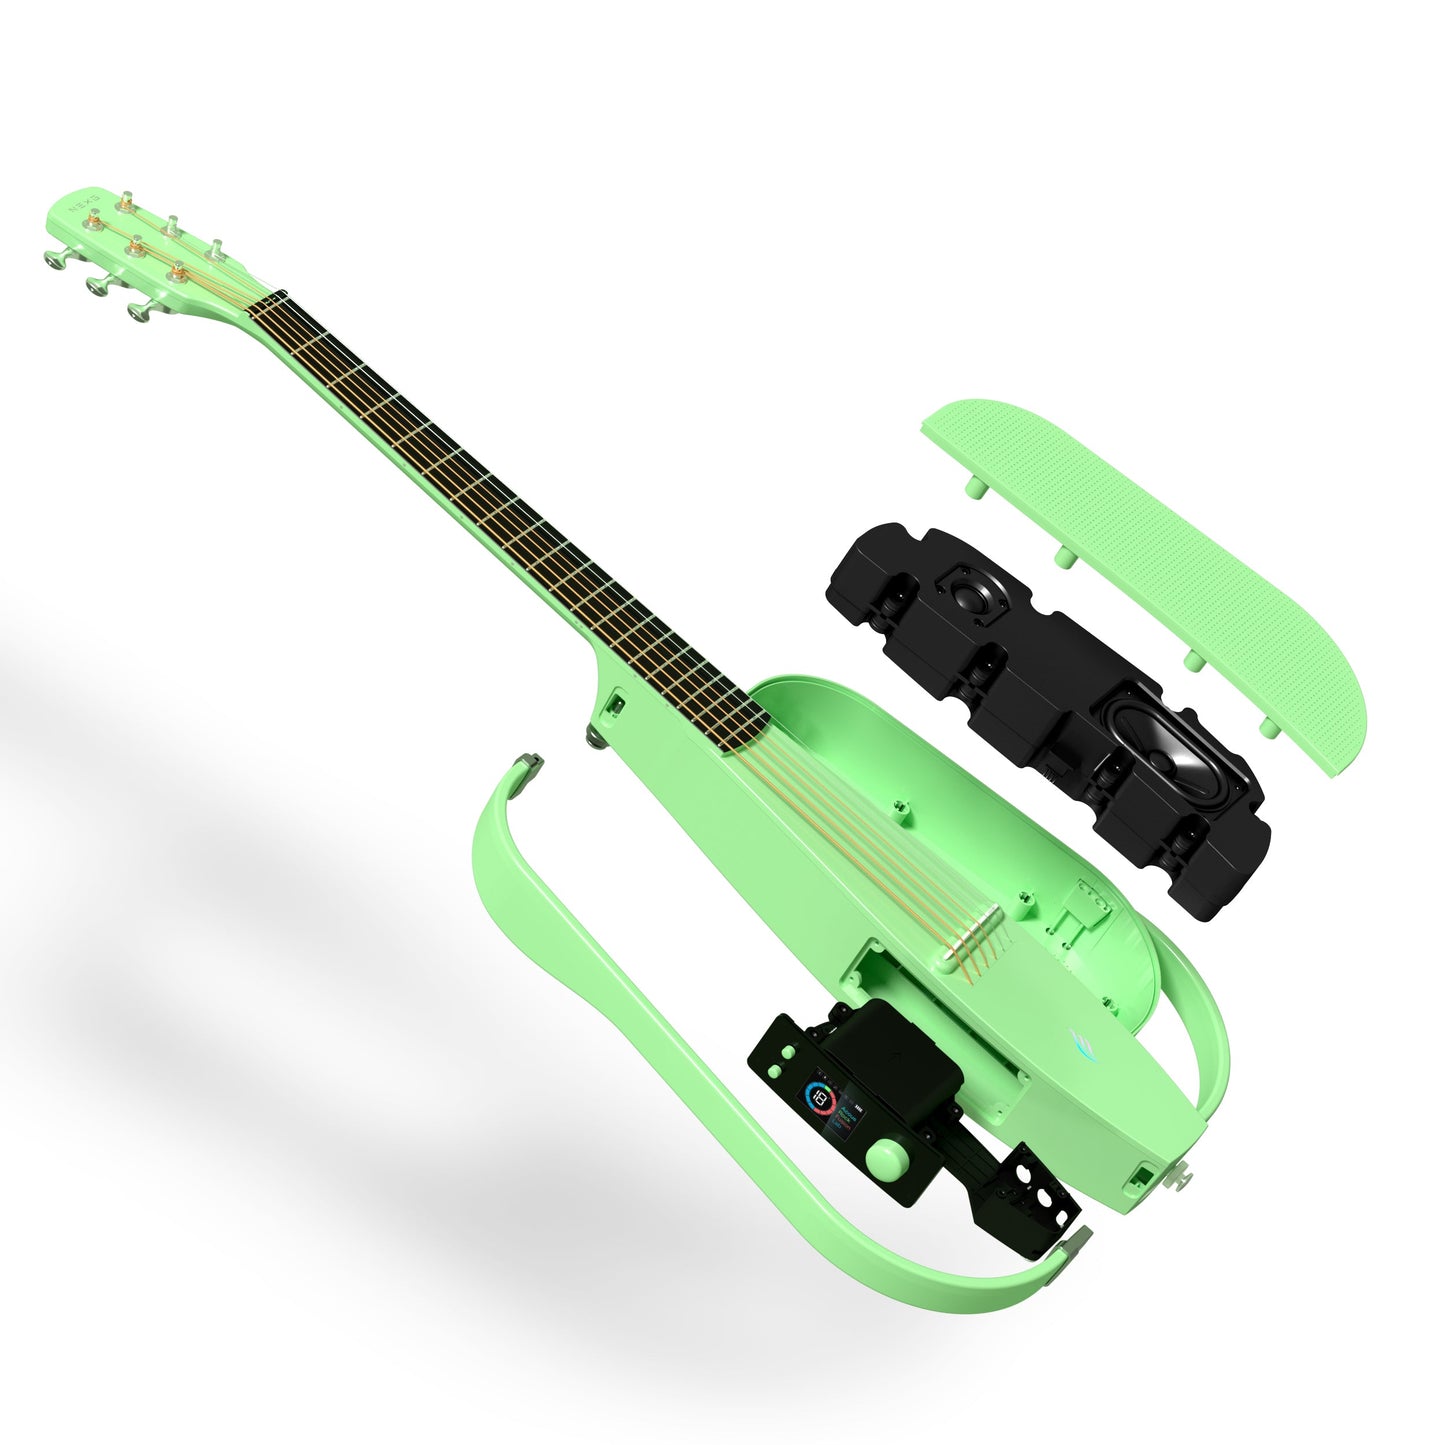 ENYA NEXG SE Carbon Fiber Guitar Green